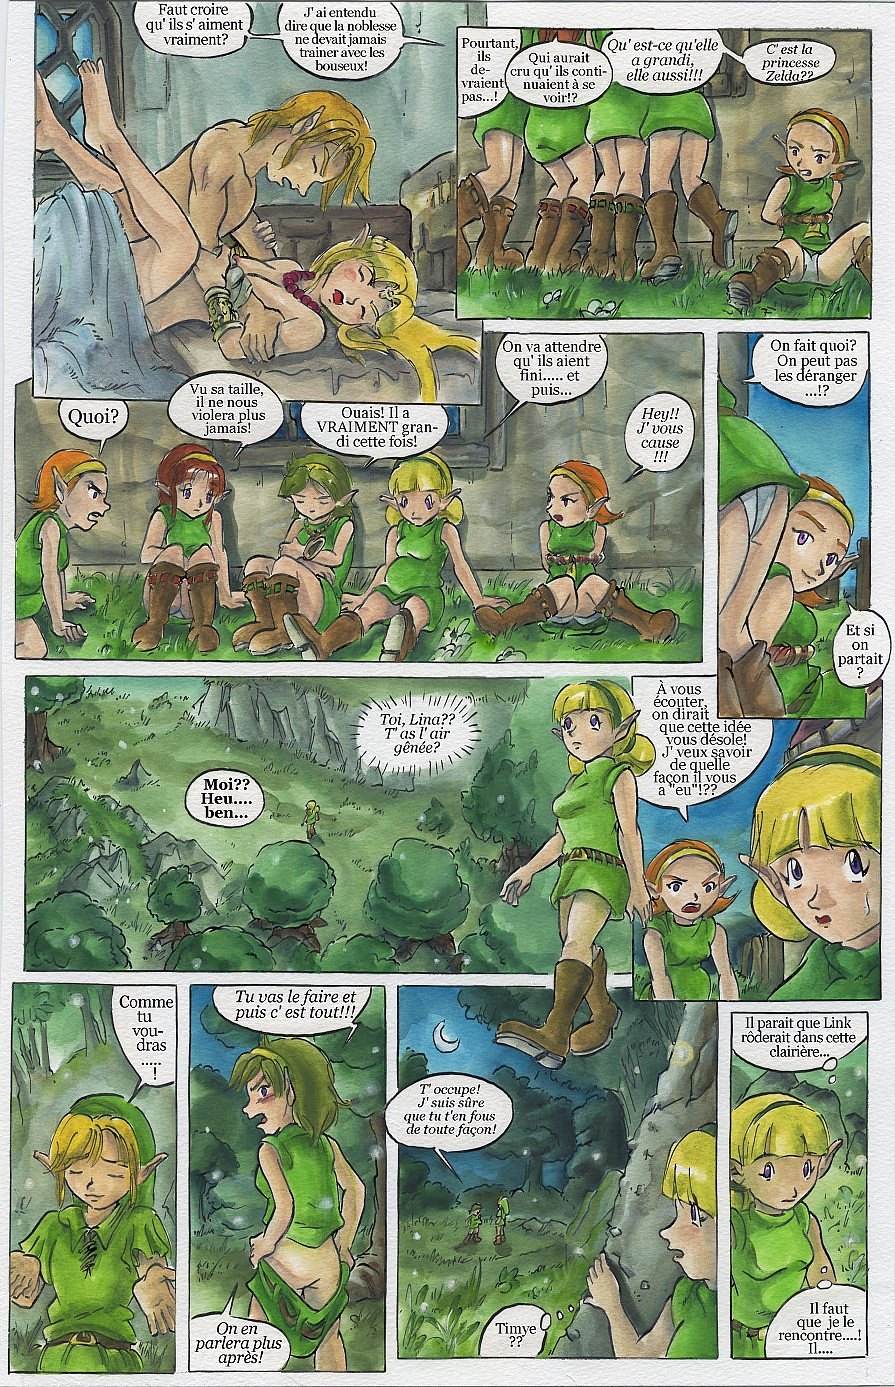 Bad Zelda numero d'image 25